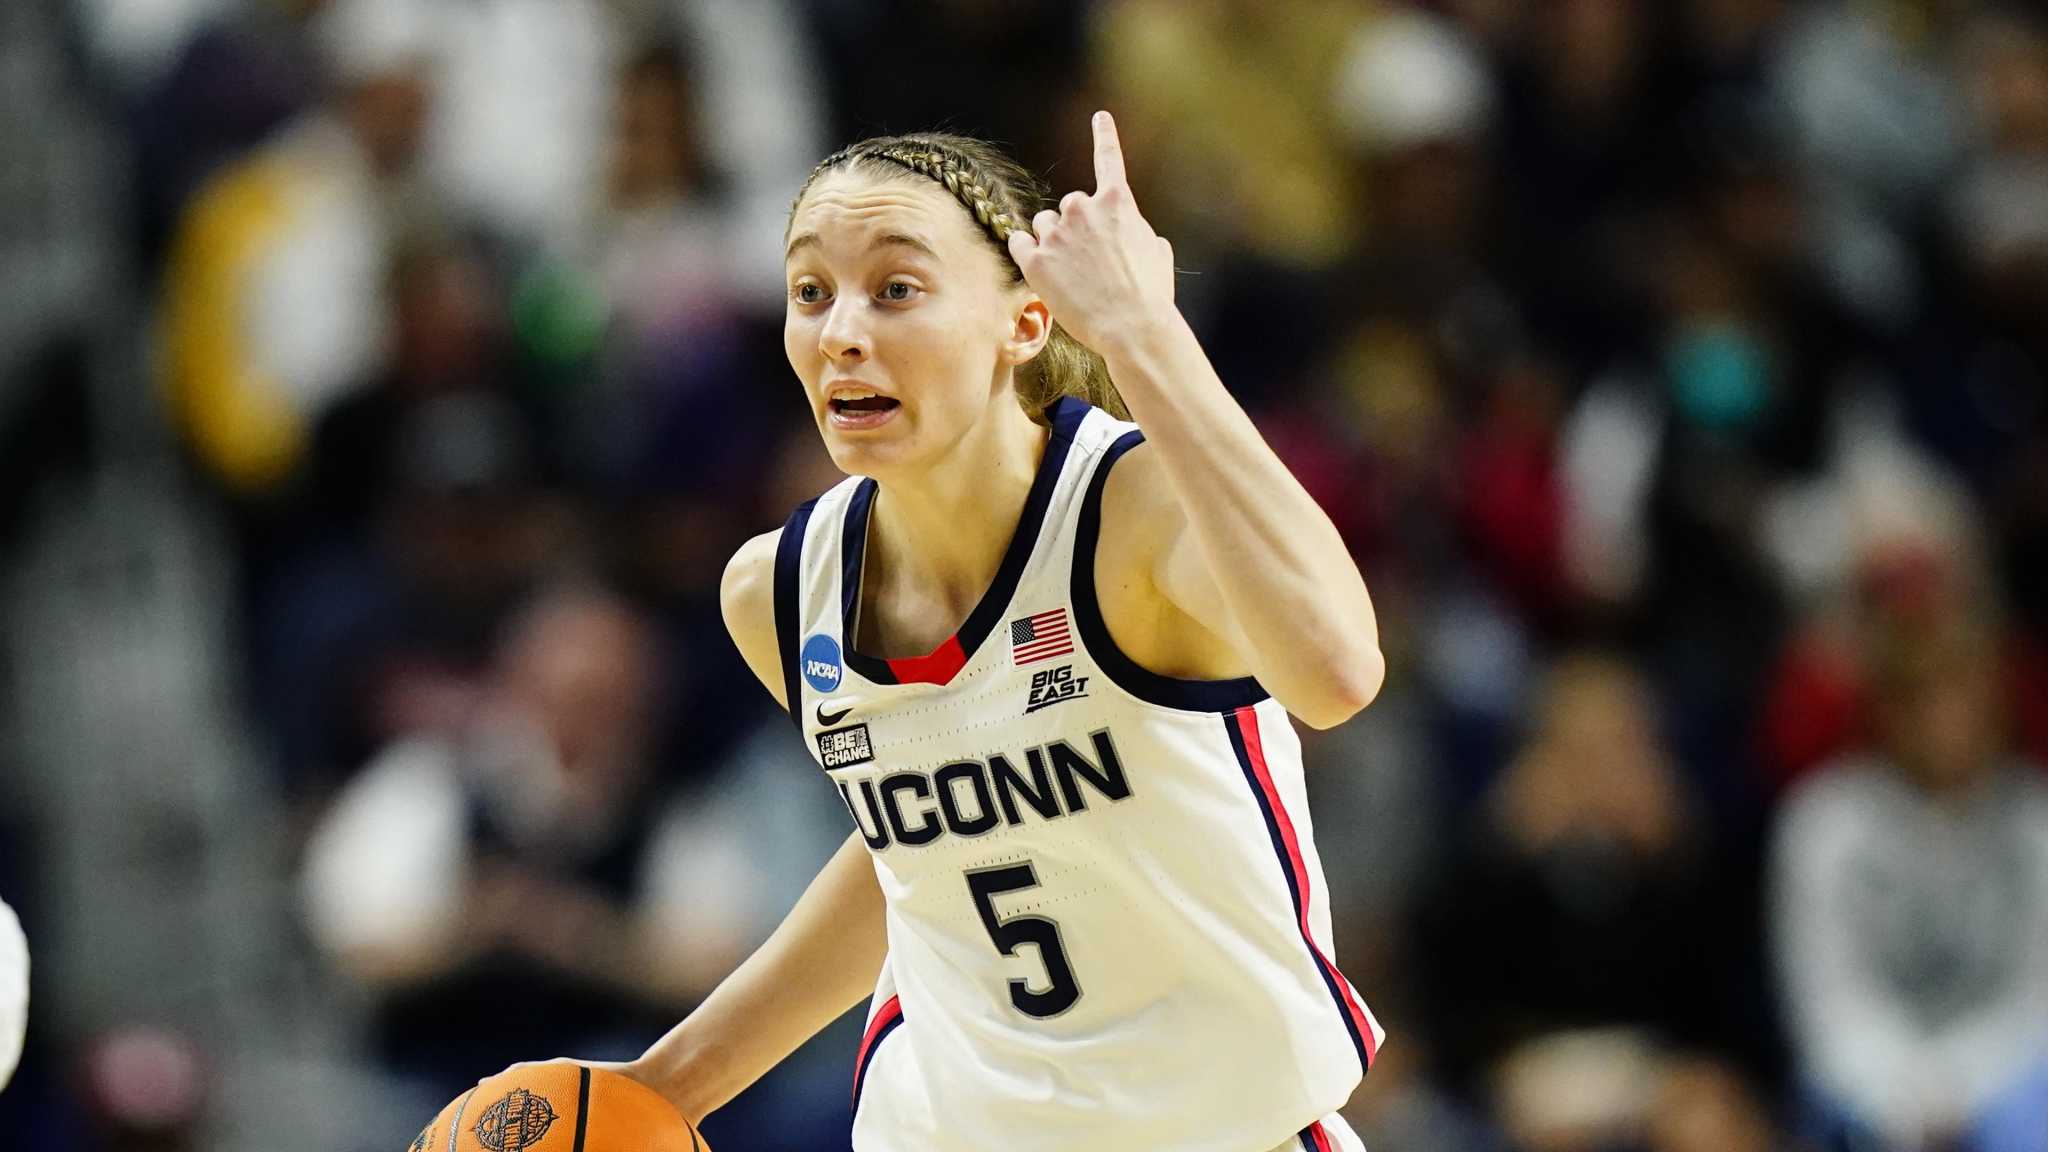 Where UConn stars Paige Bueckers lands in ESPN's WNBA mock draft